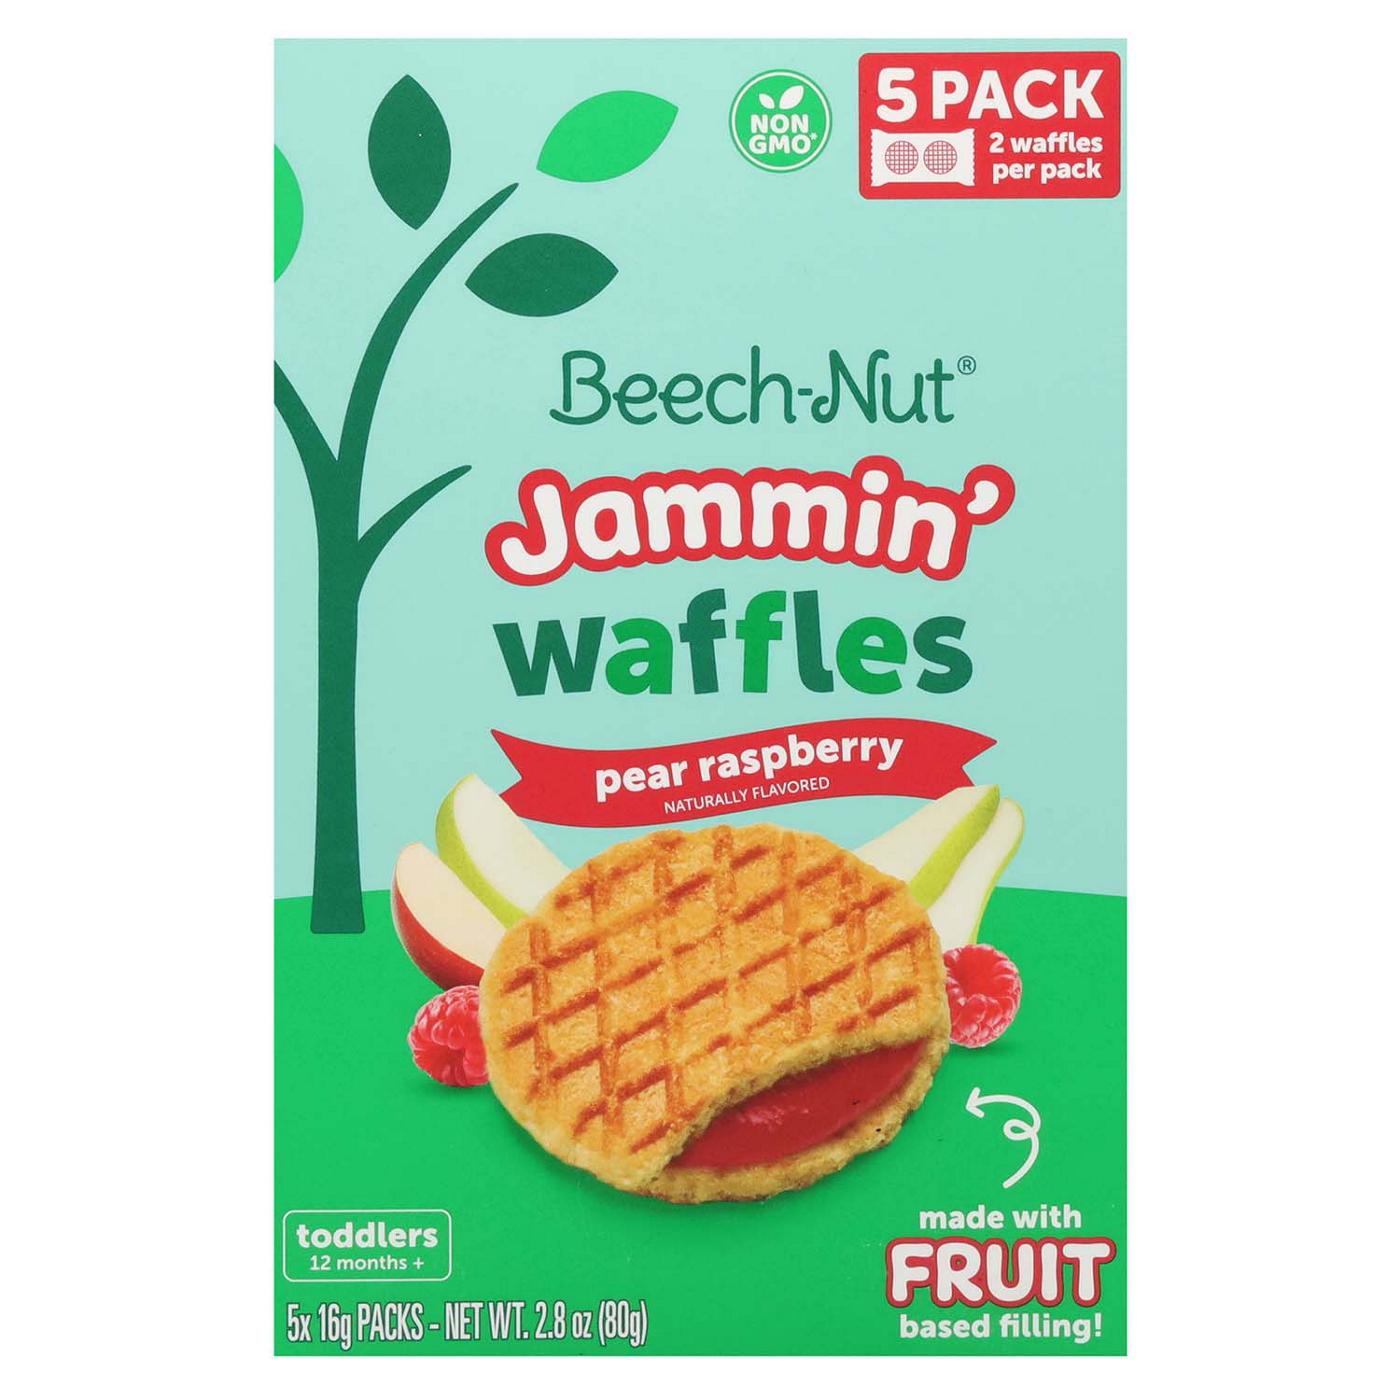 Beech-Nut Jammin' Waffles - Pear Raspberry; image 1 of 4